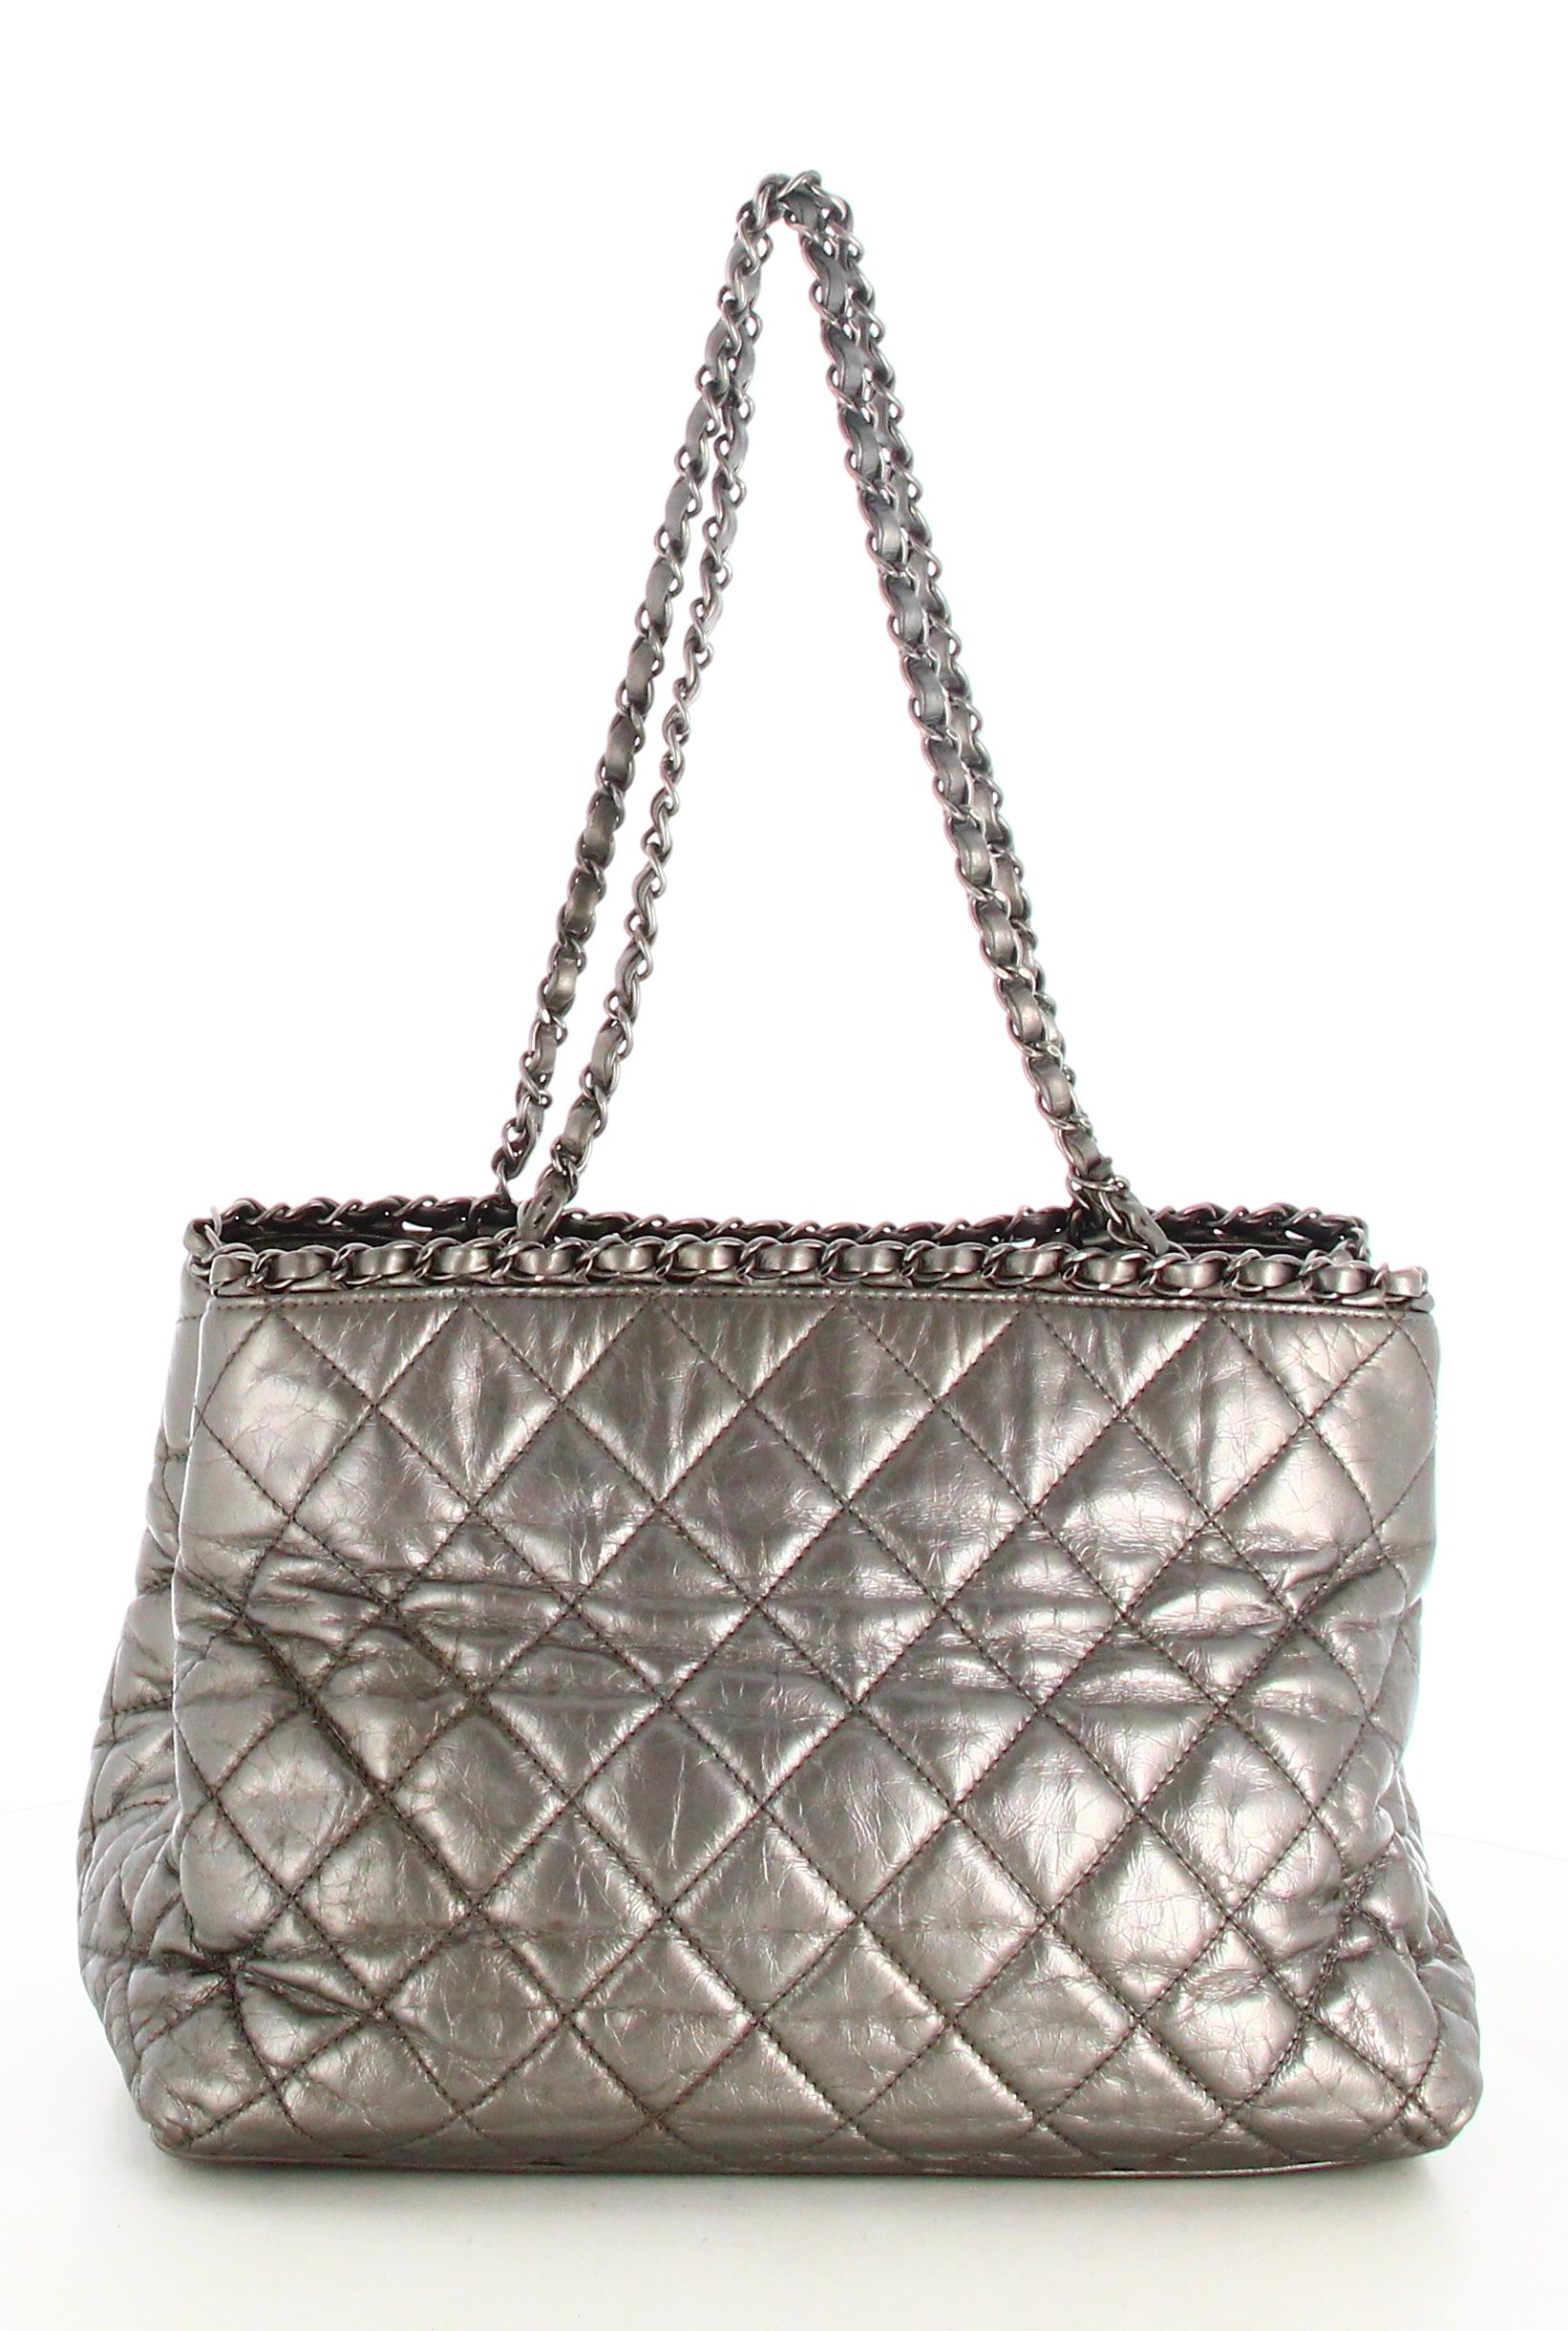 2012 Chanel Chain Me Tote Handbag Grey 2